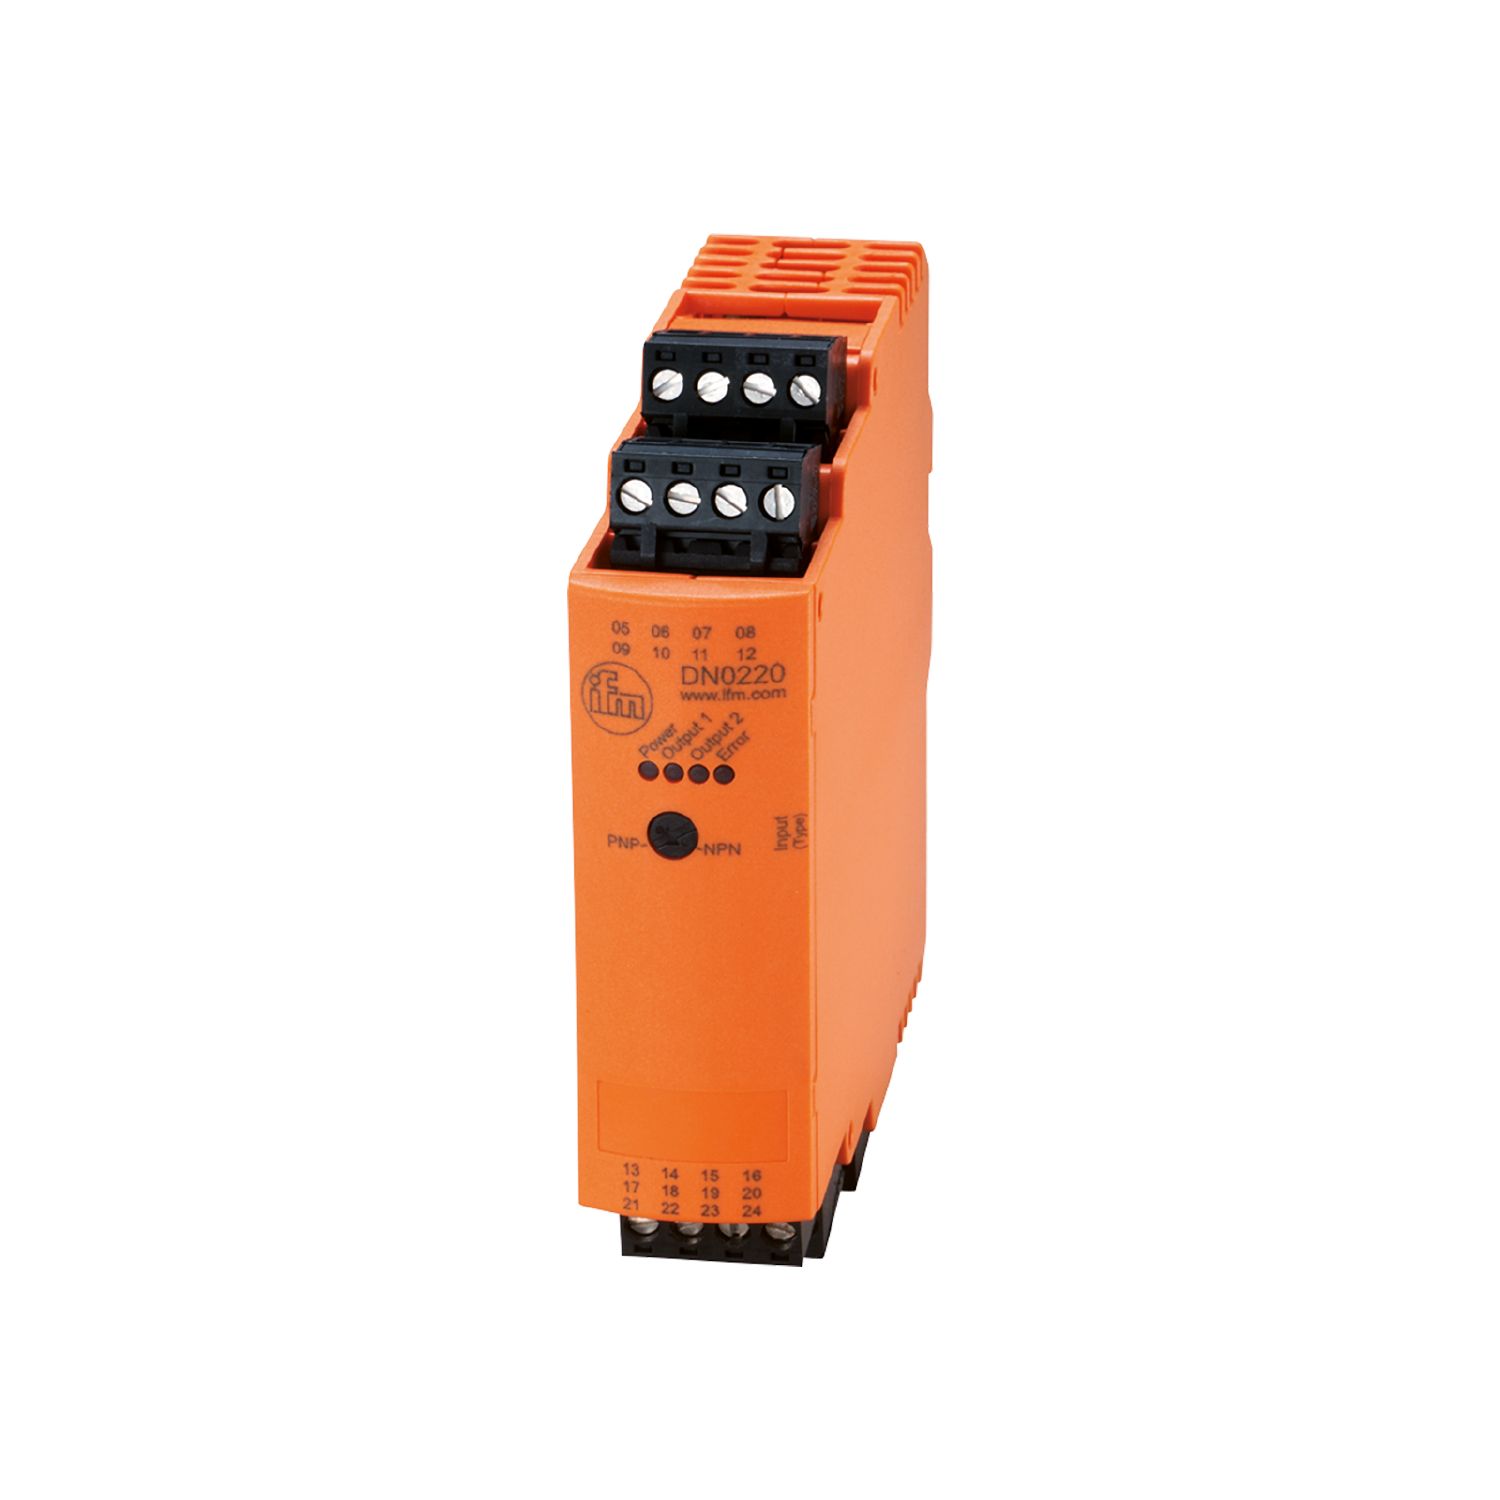 IFM Switch amplifier AMPLIFICATEUR N00200 NV0200 SCHALTVERSTAKER 250VAC 5A 100V 